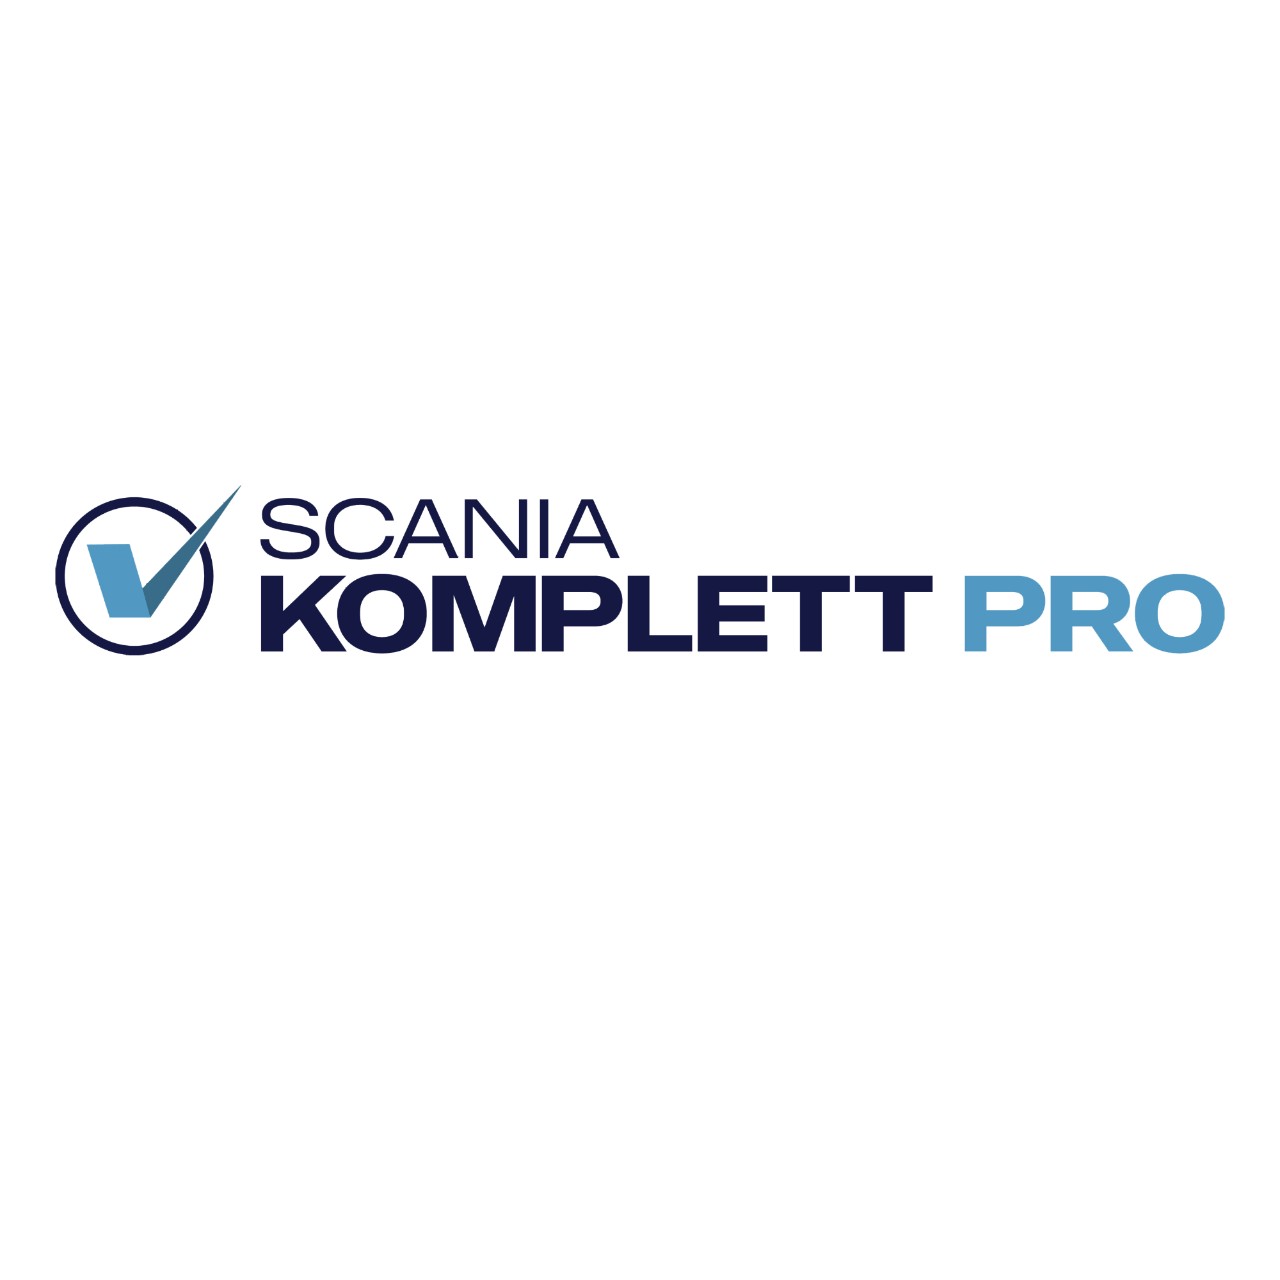 Scania Komplett PRO Logo